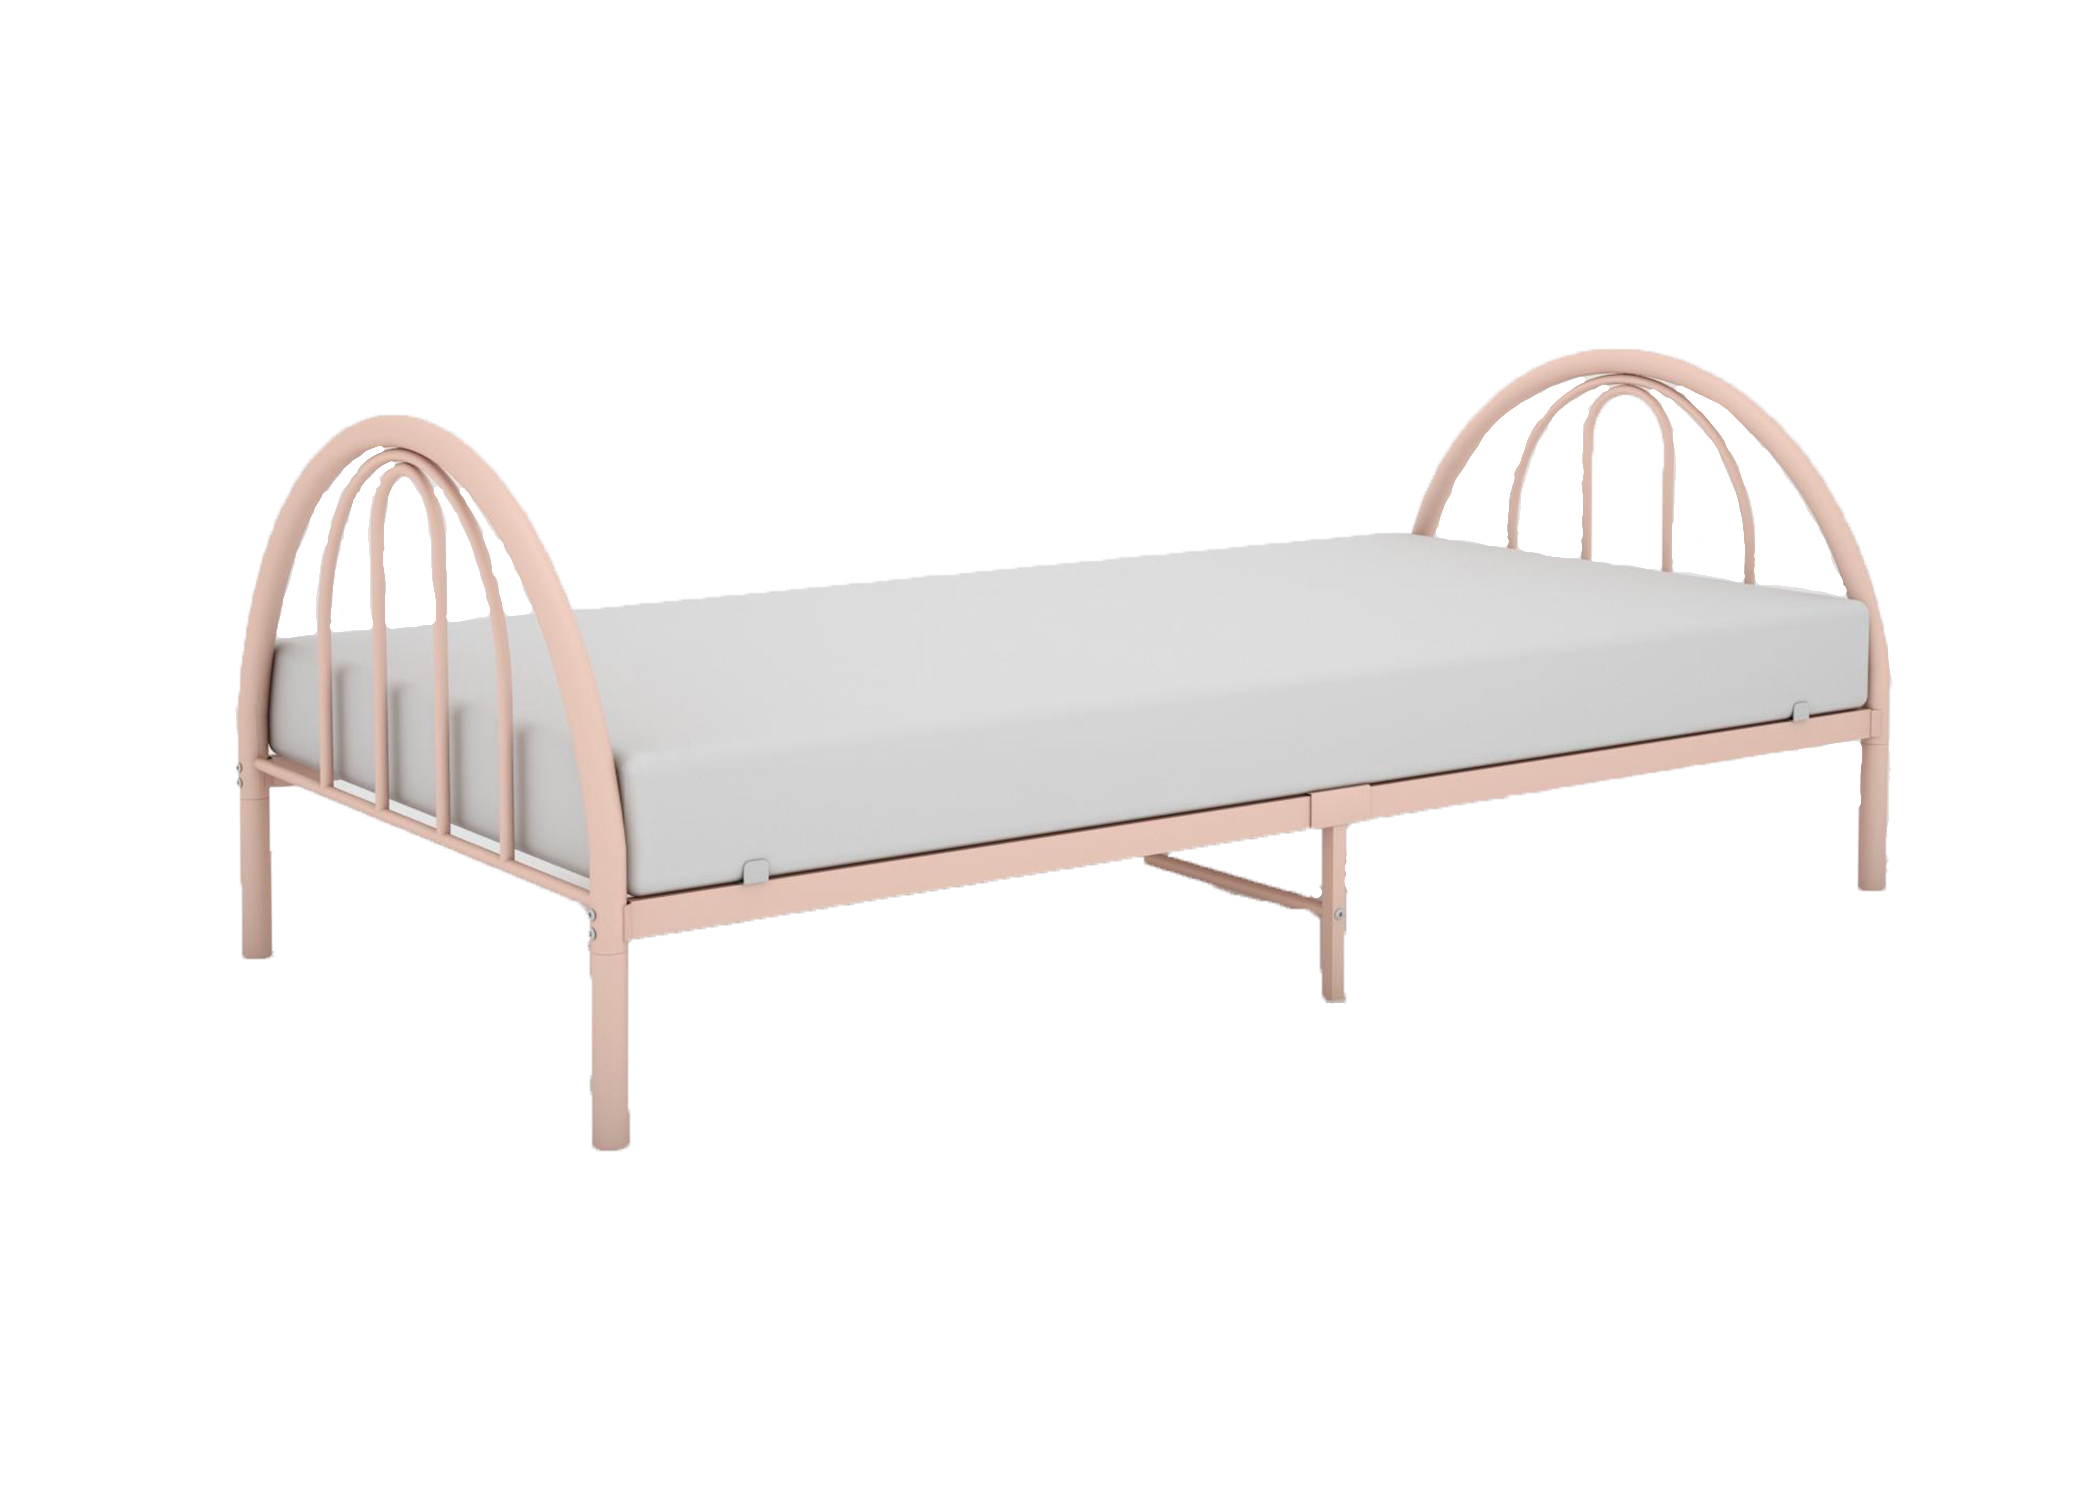 BK Furniture Brooklyn Classic Metal Bed, Twin, Clay - image 3 of 5